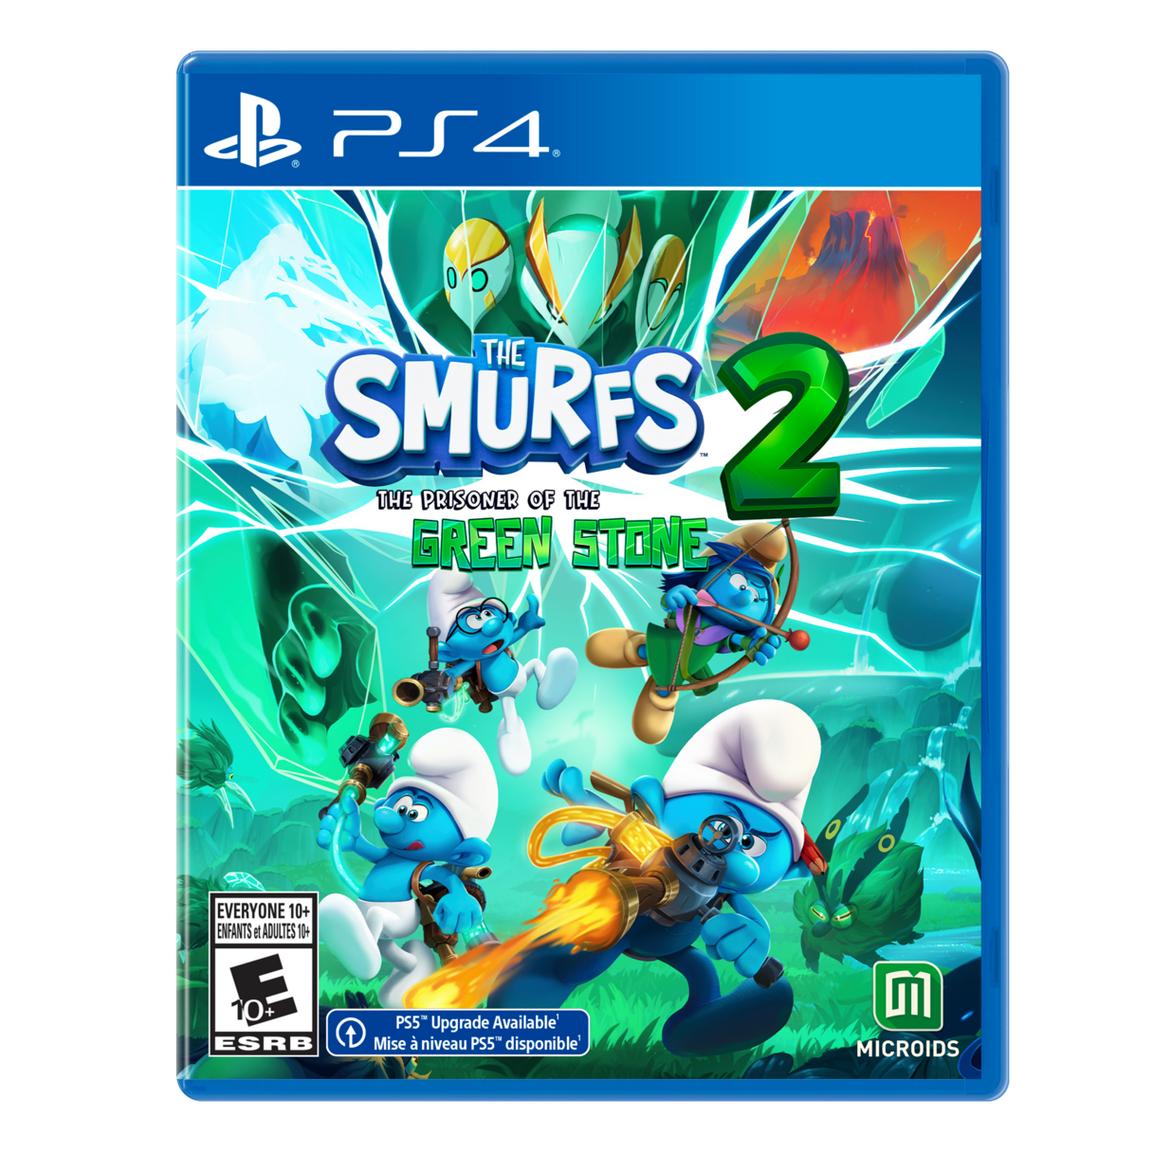 Видеоигра The Smurfs 2: Prisoner of the Green Stone - PlayStation 4